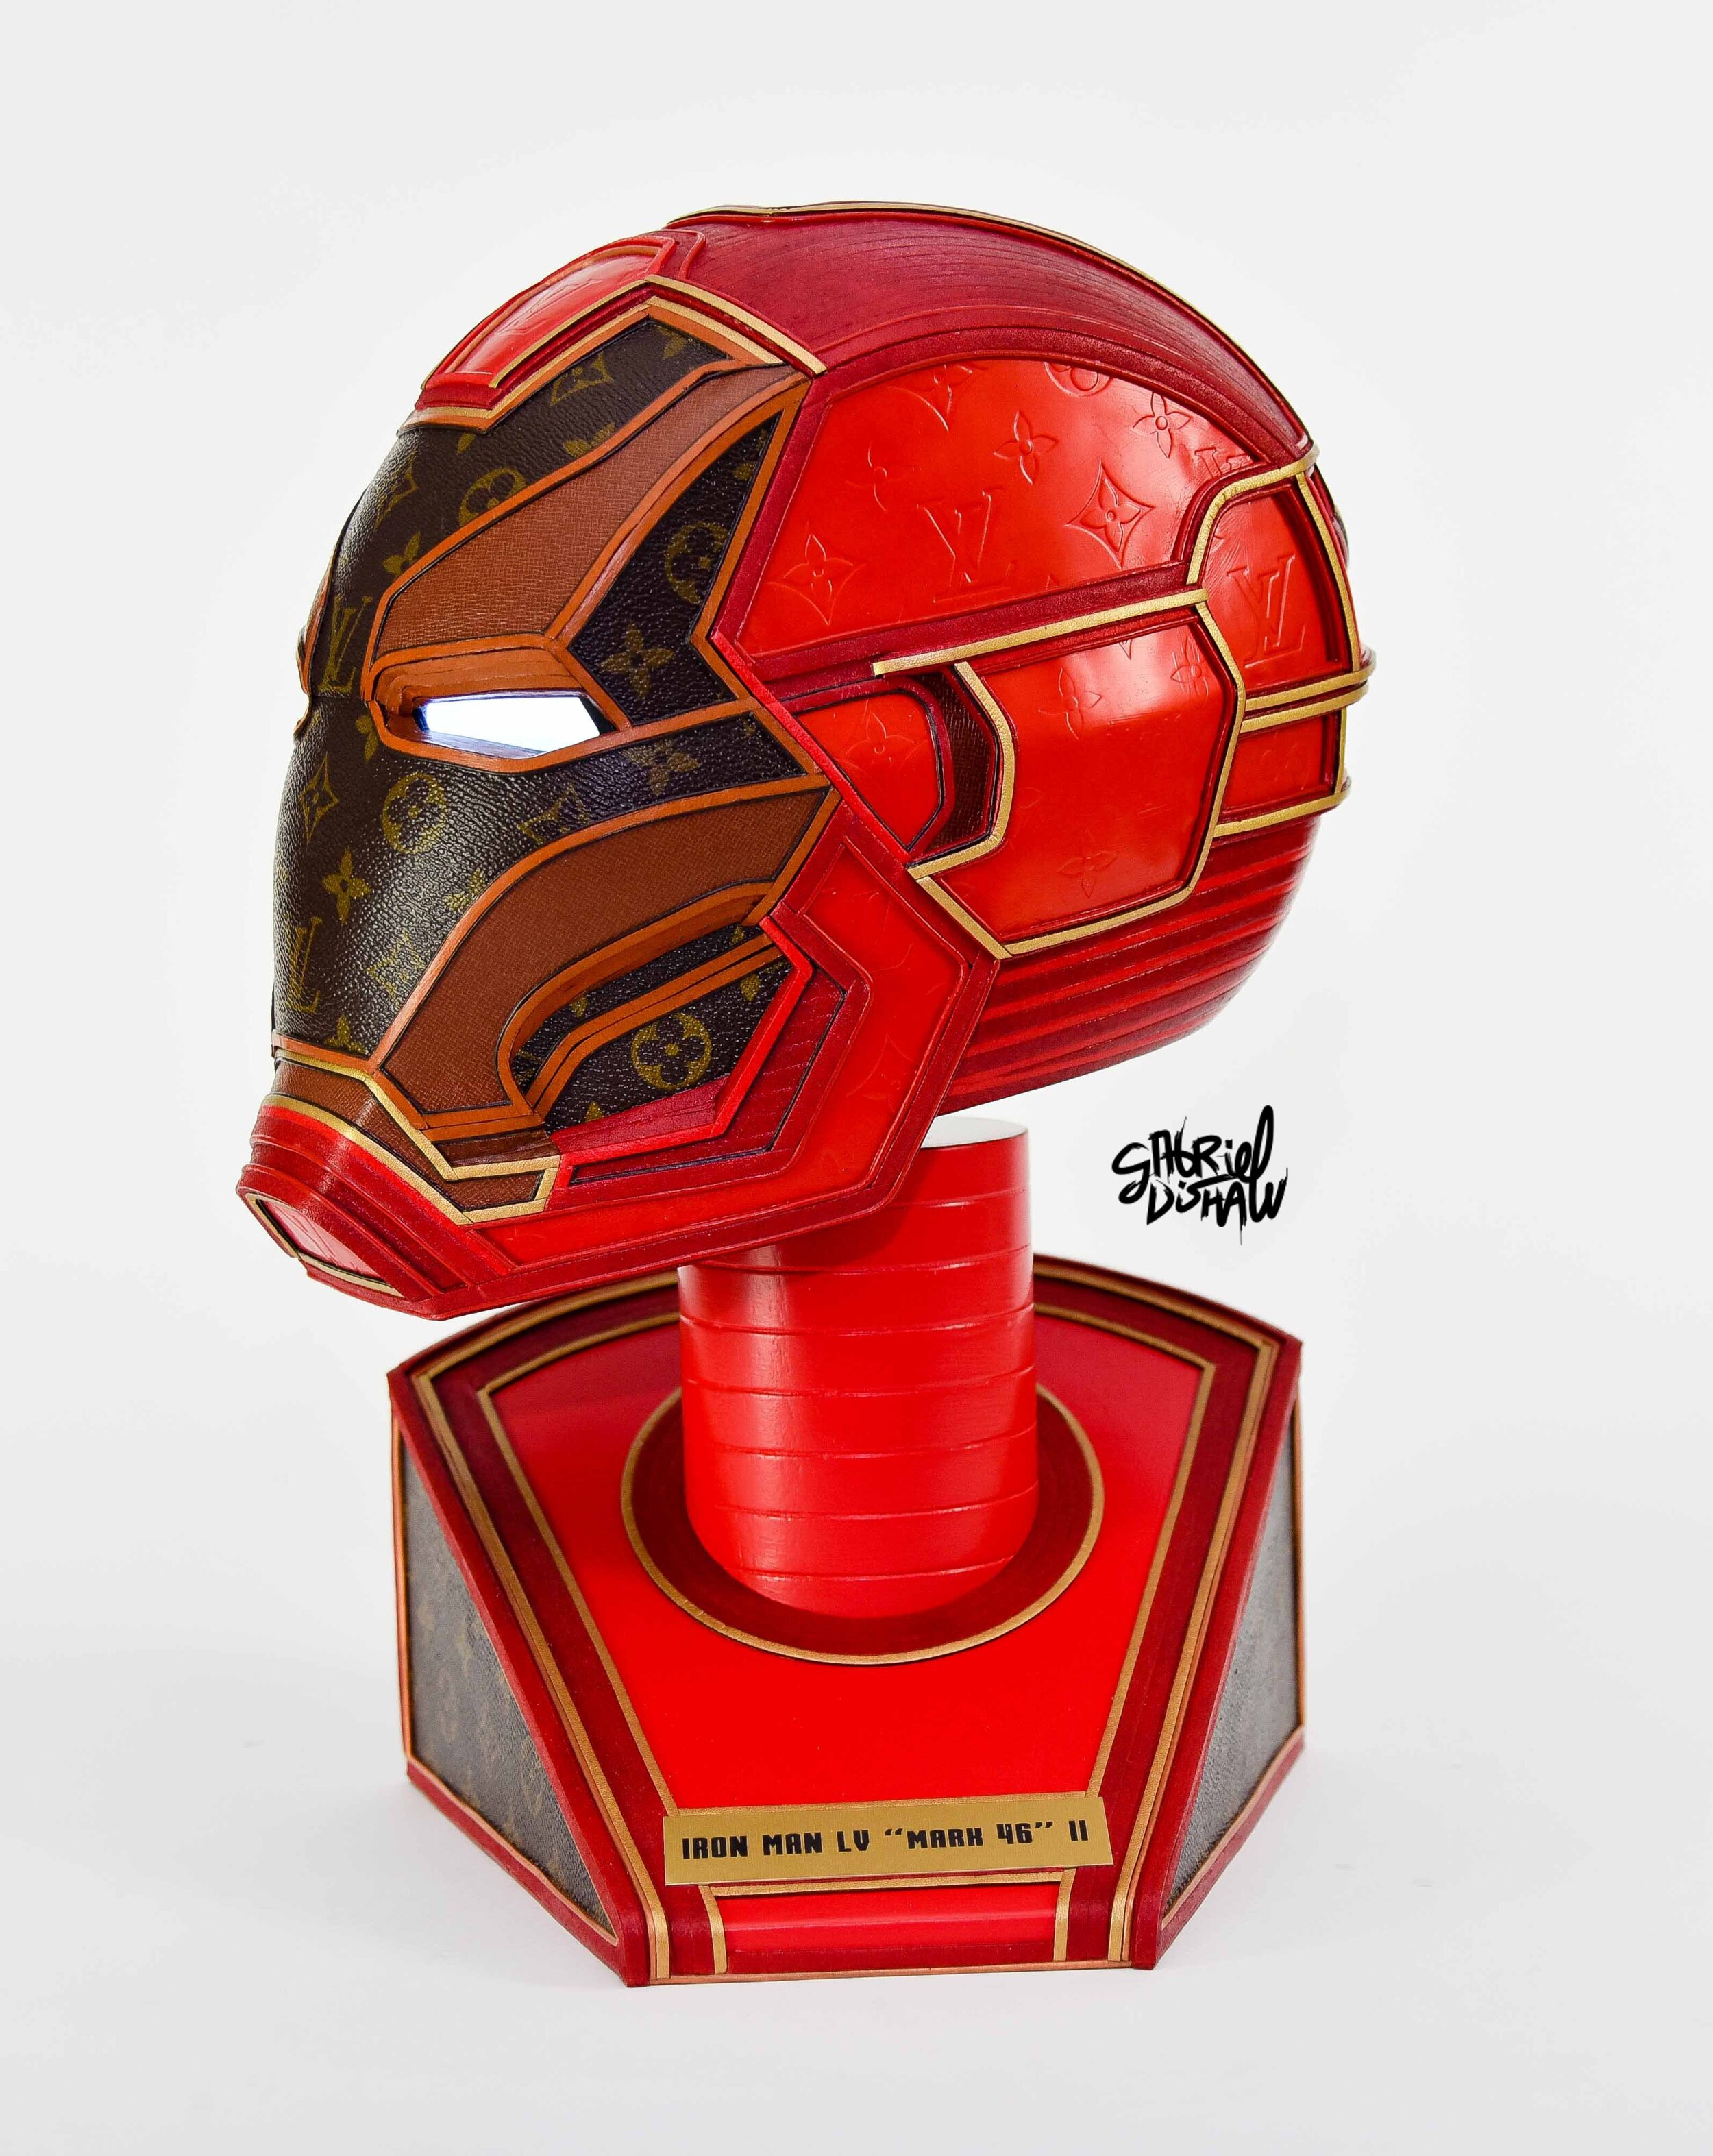 Iron Man LV 2 — Gabriel Dishaw